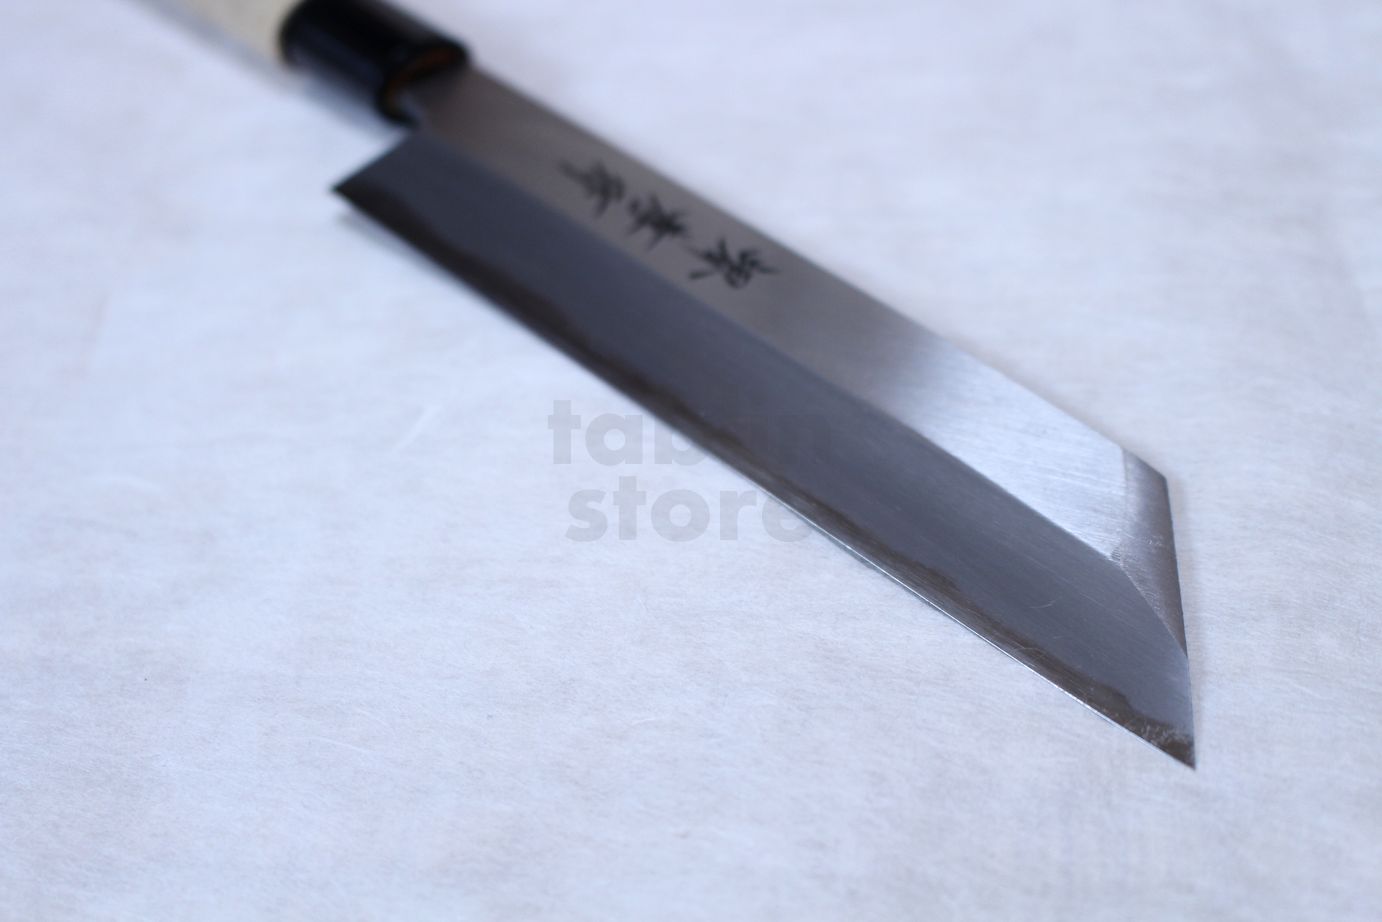 Sakai Takayuki, Mukimono Knife 180mm